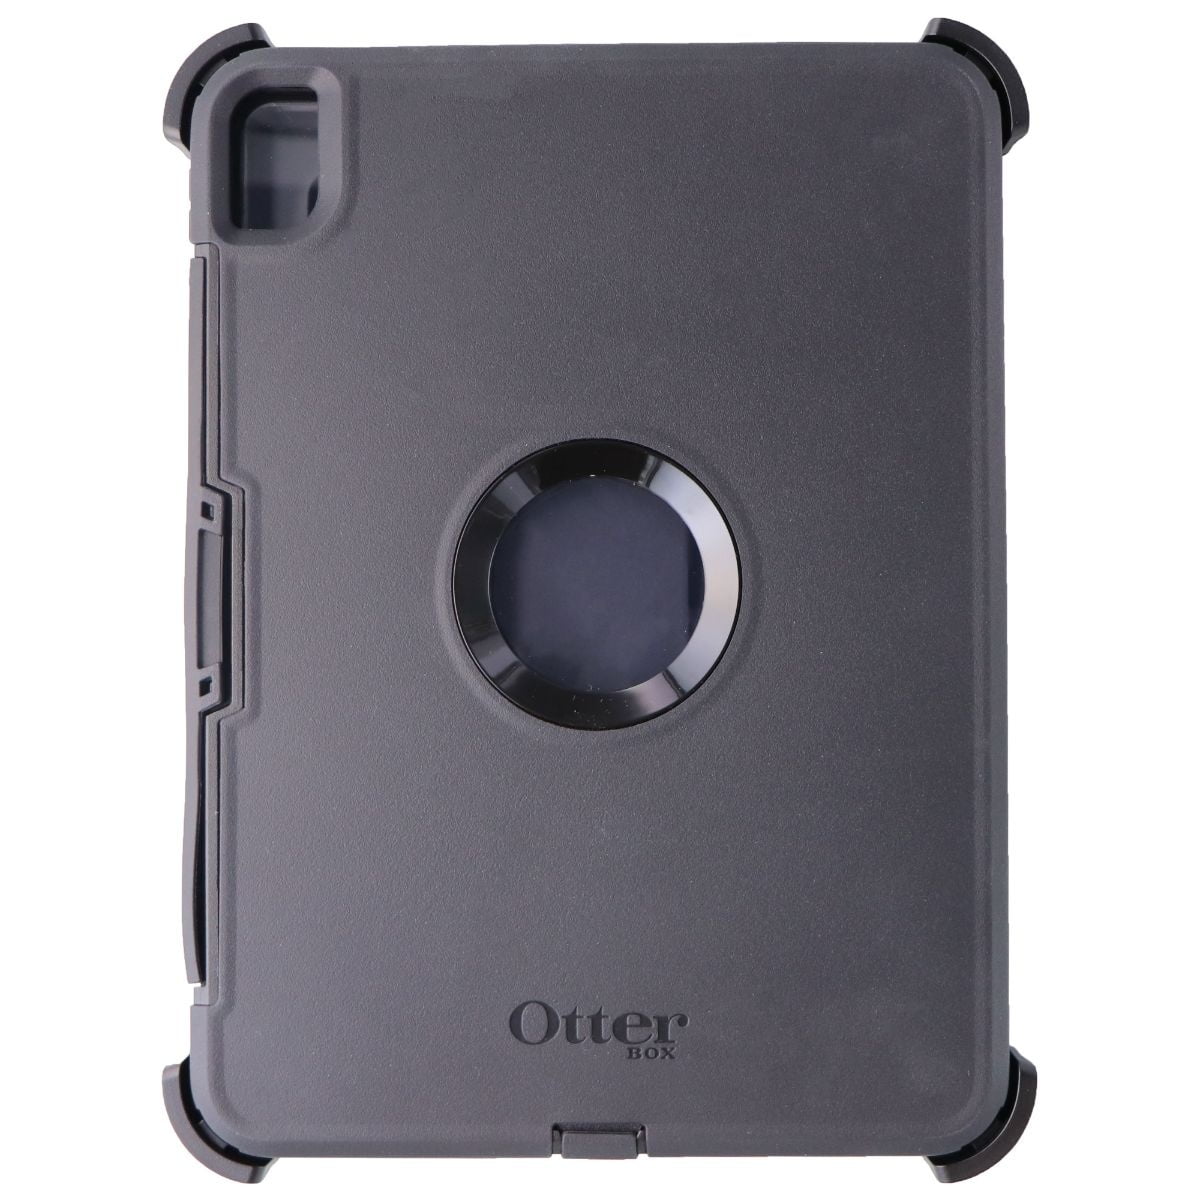 WiFi TabletBlack16GBBundle Apple iPad 1st Generation Otter Box Case 